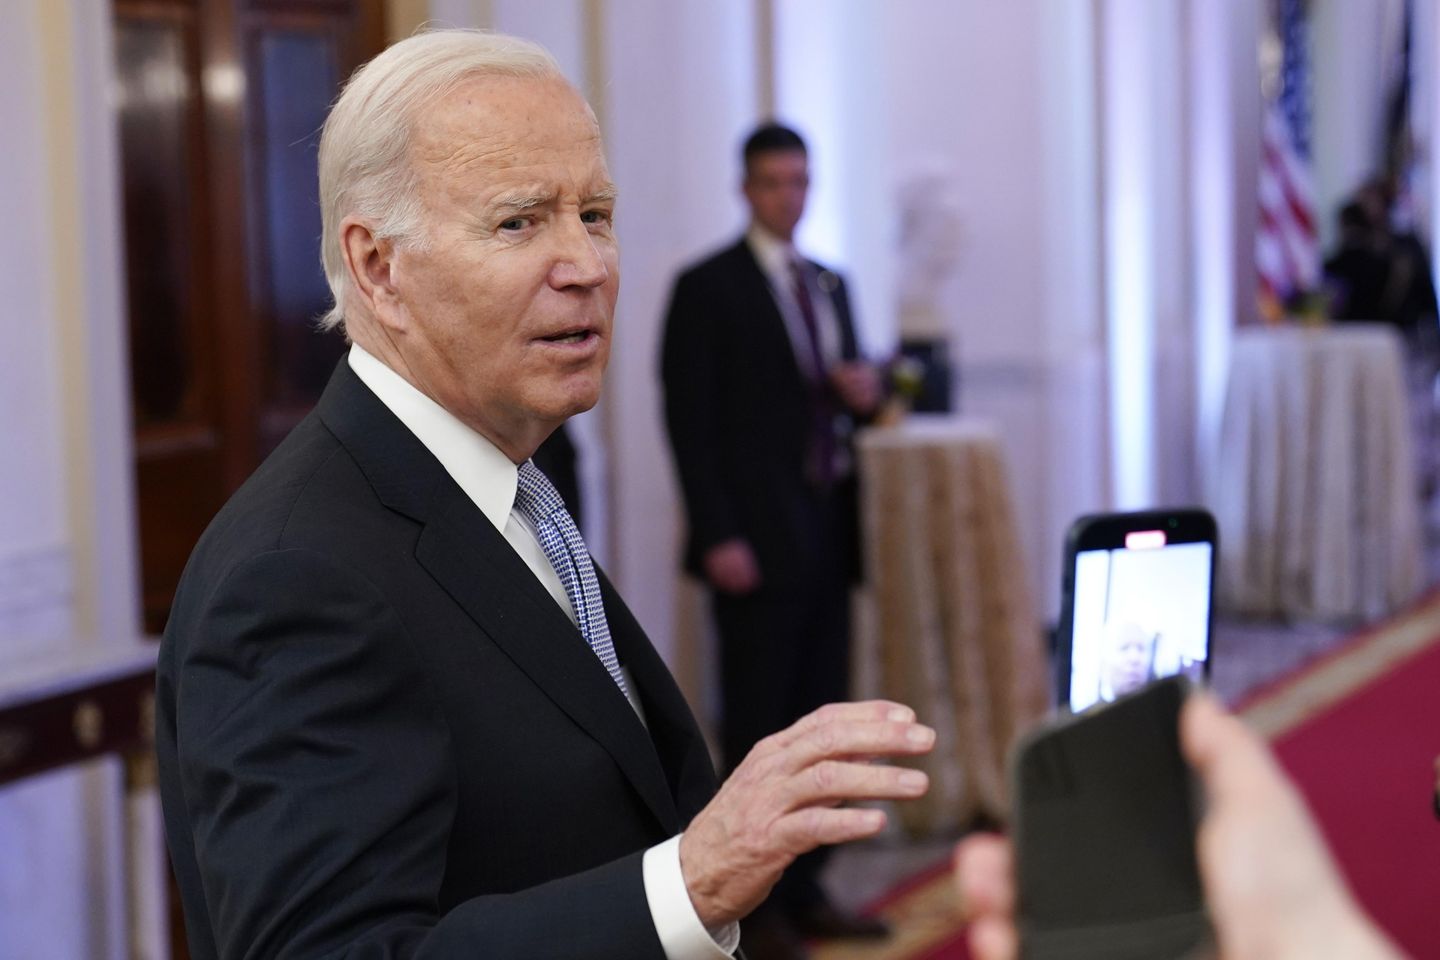 Biden classified document crisis worsens as Democrats rip handling of materials